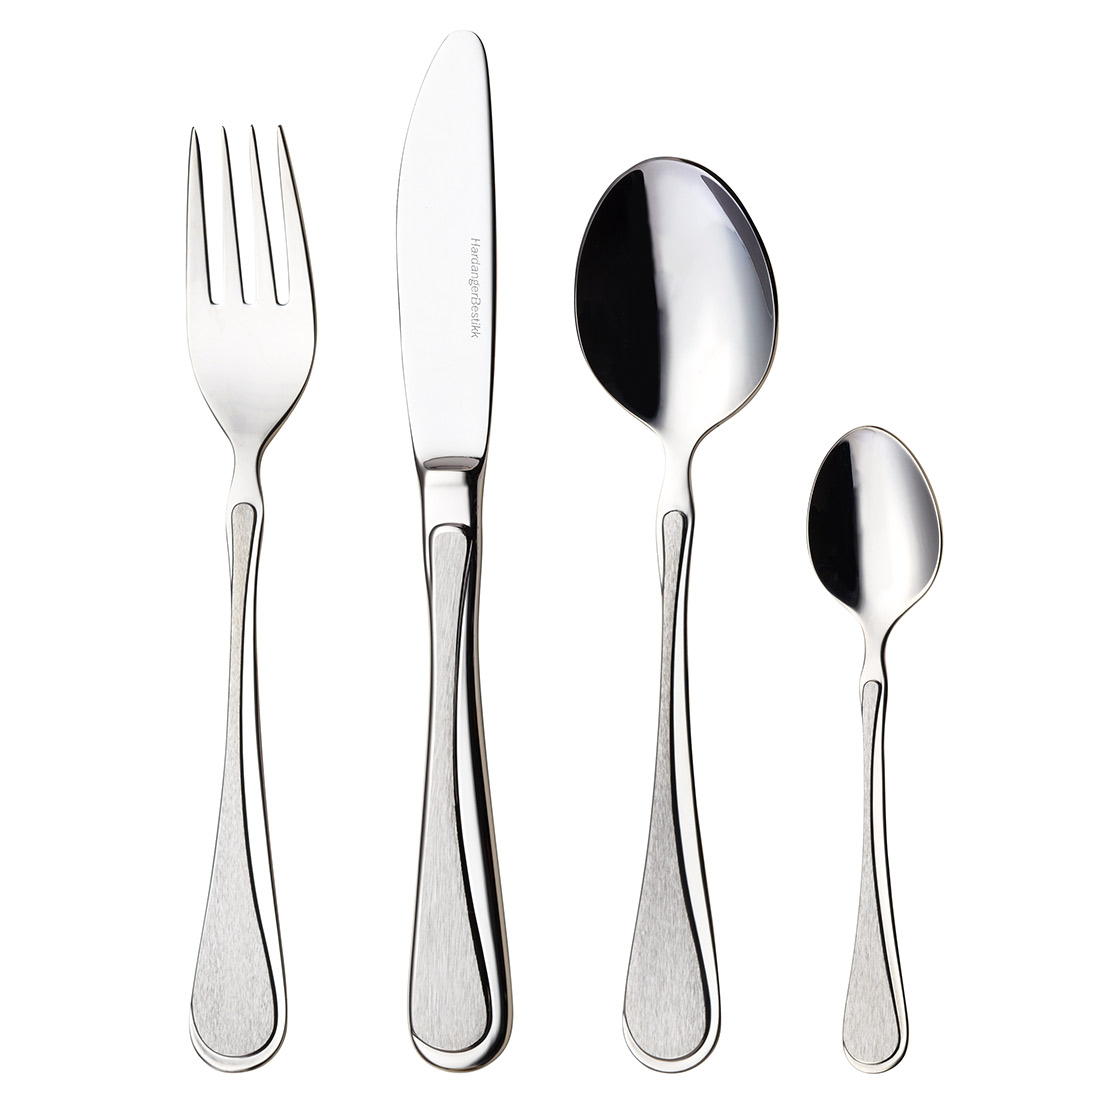 Carina cutlery set product image